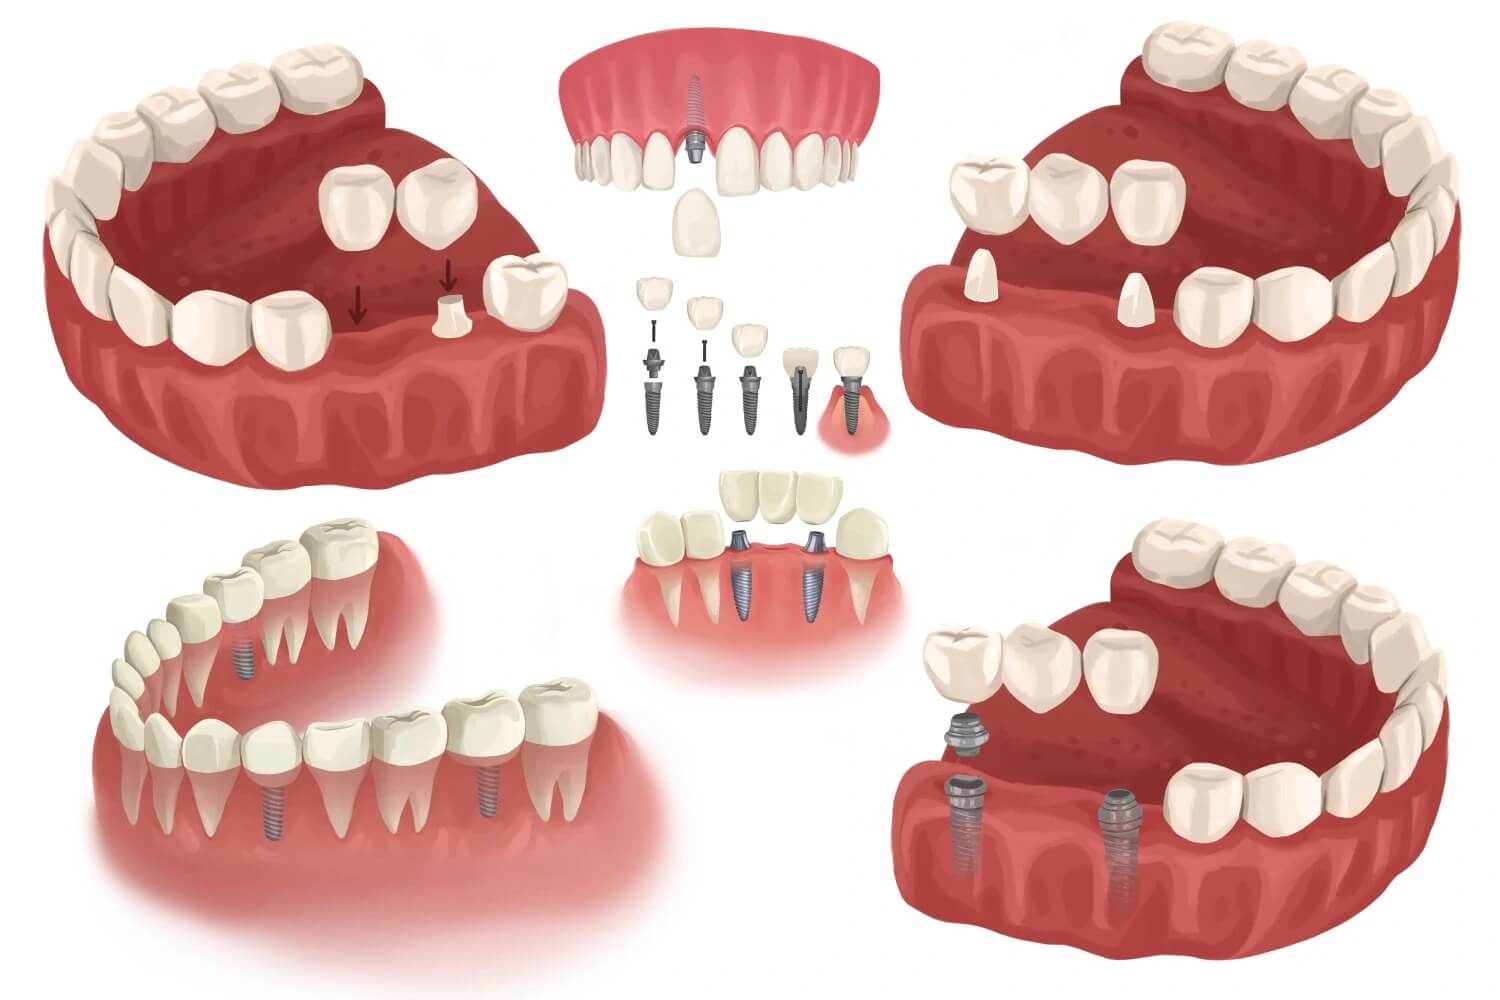 Different configurations of dental implants & bridges